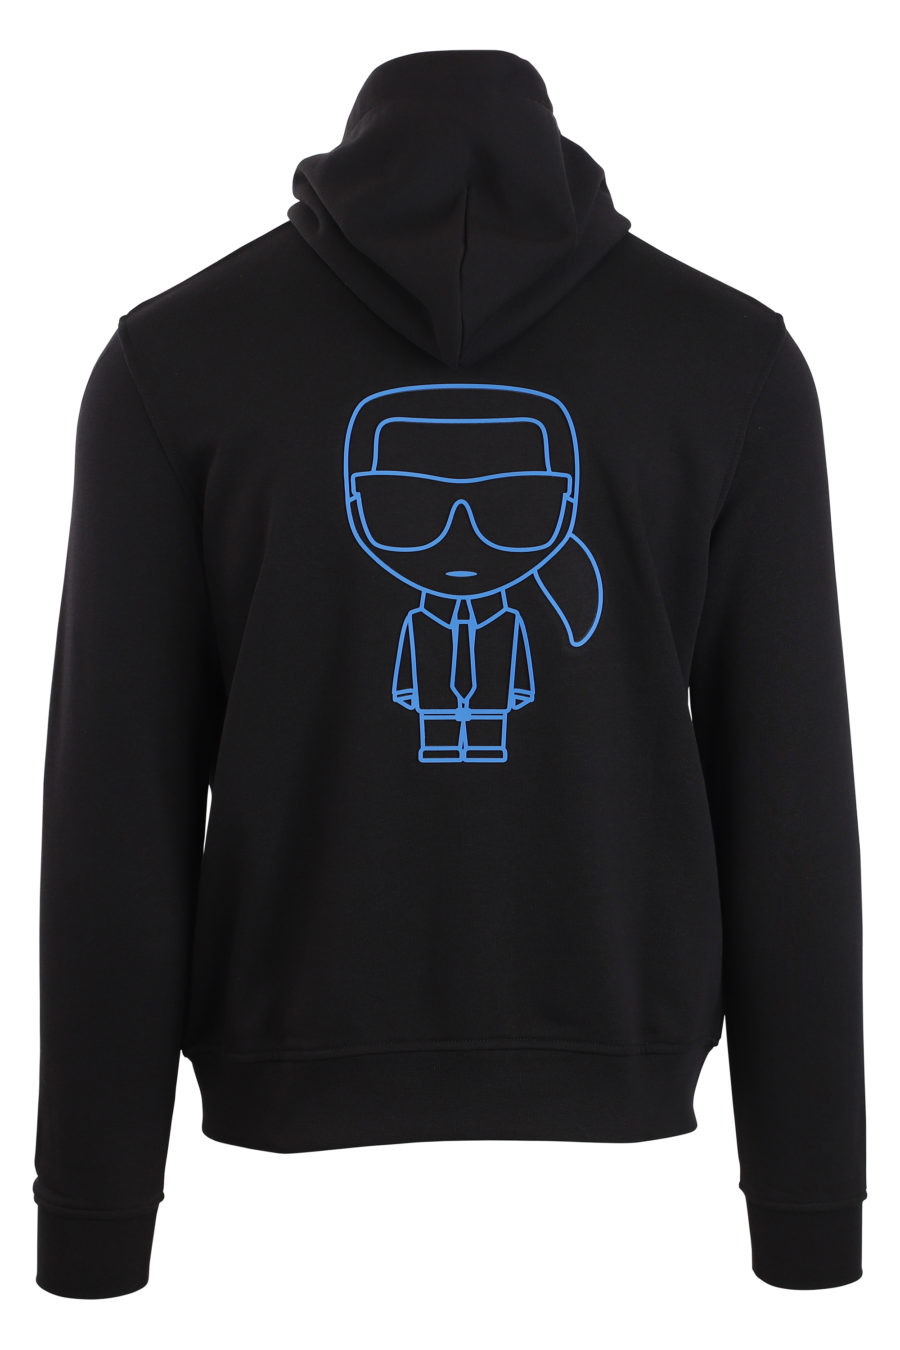 Black sweatshirt with hood and blue logo - IMG 0915